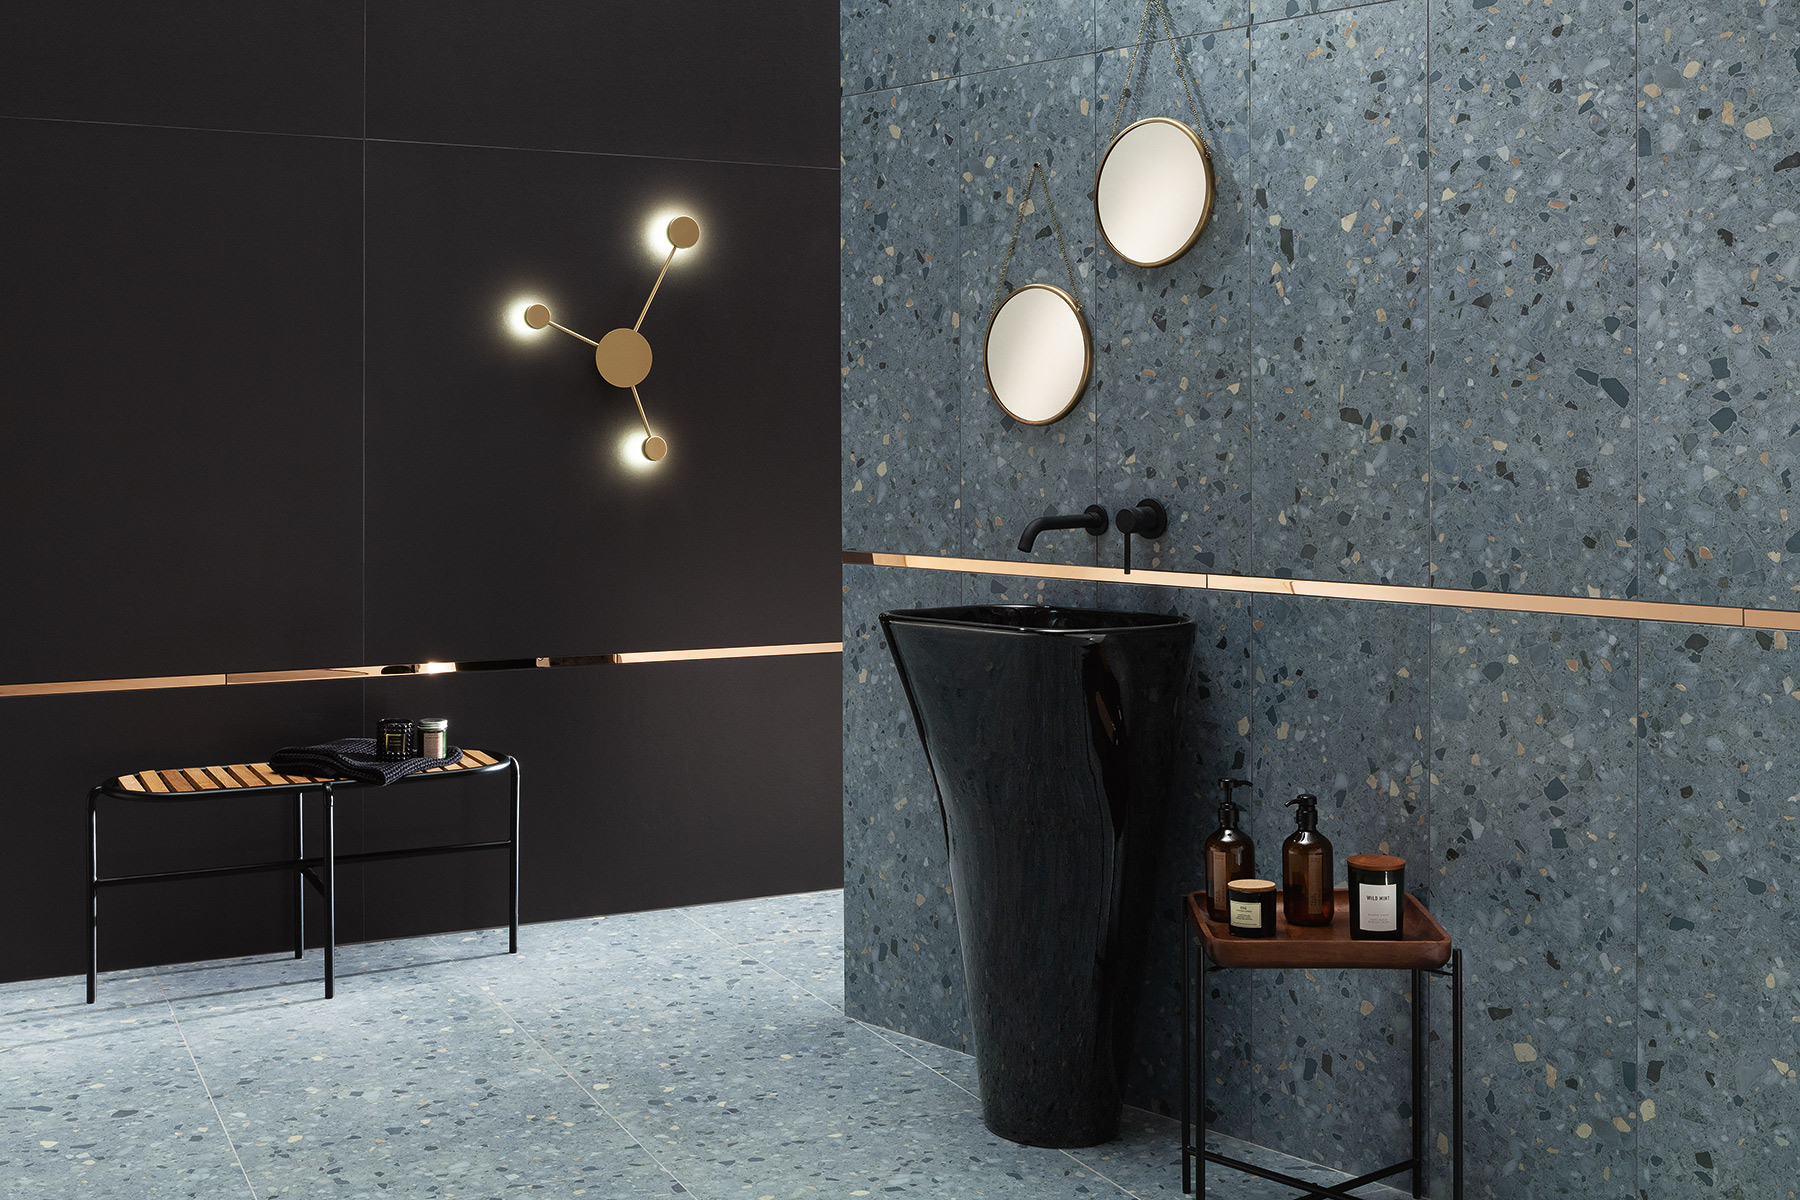 Porcelain Terrazzo wall & floor tiles in a high-end designer bathroom - Macchia Blue